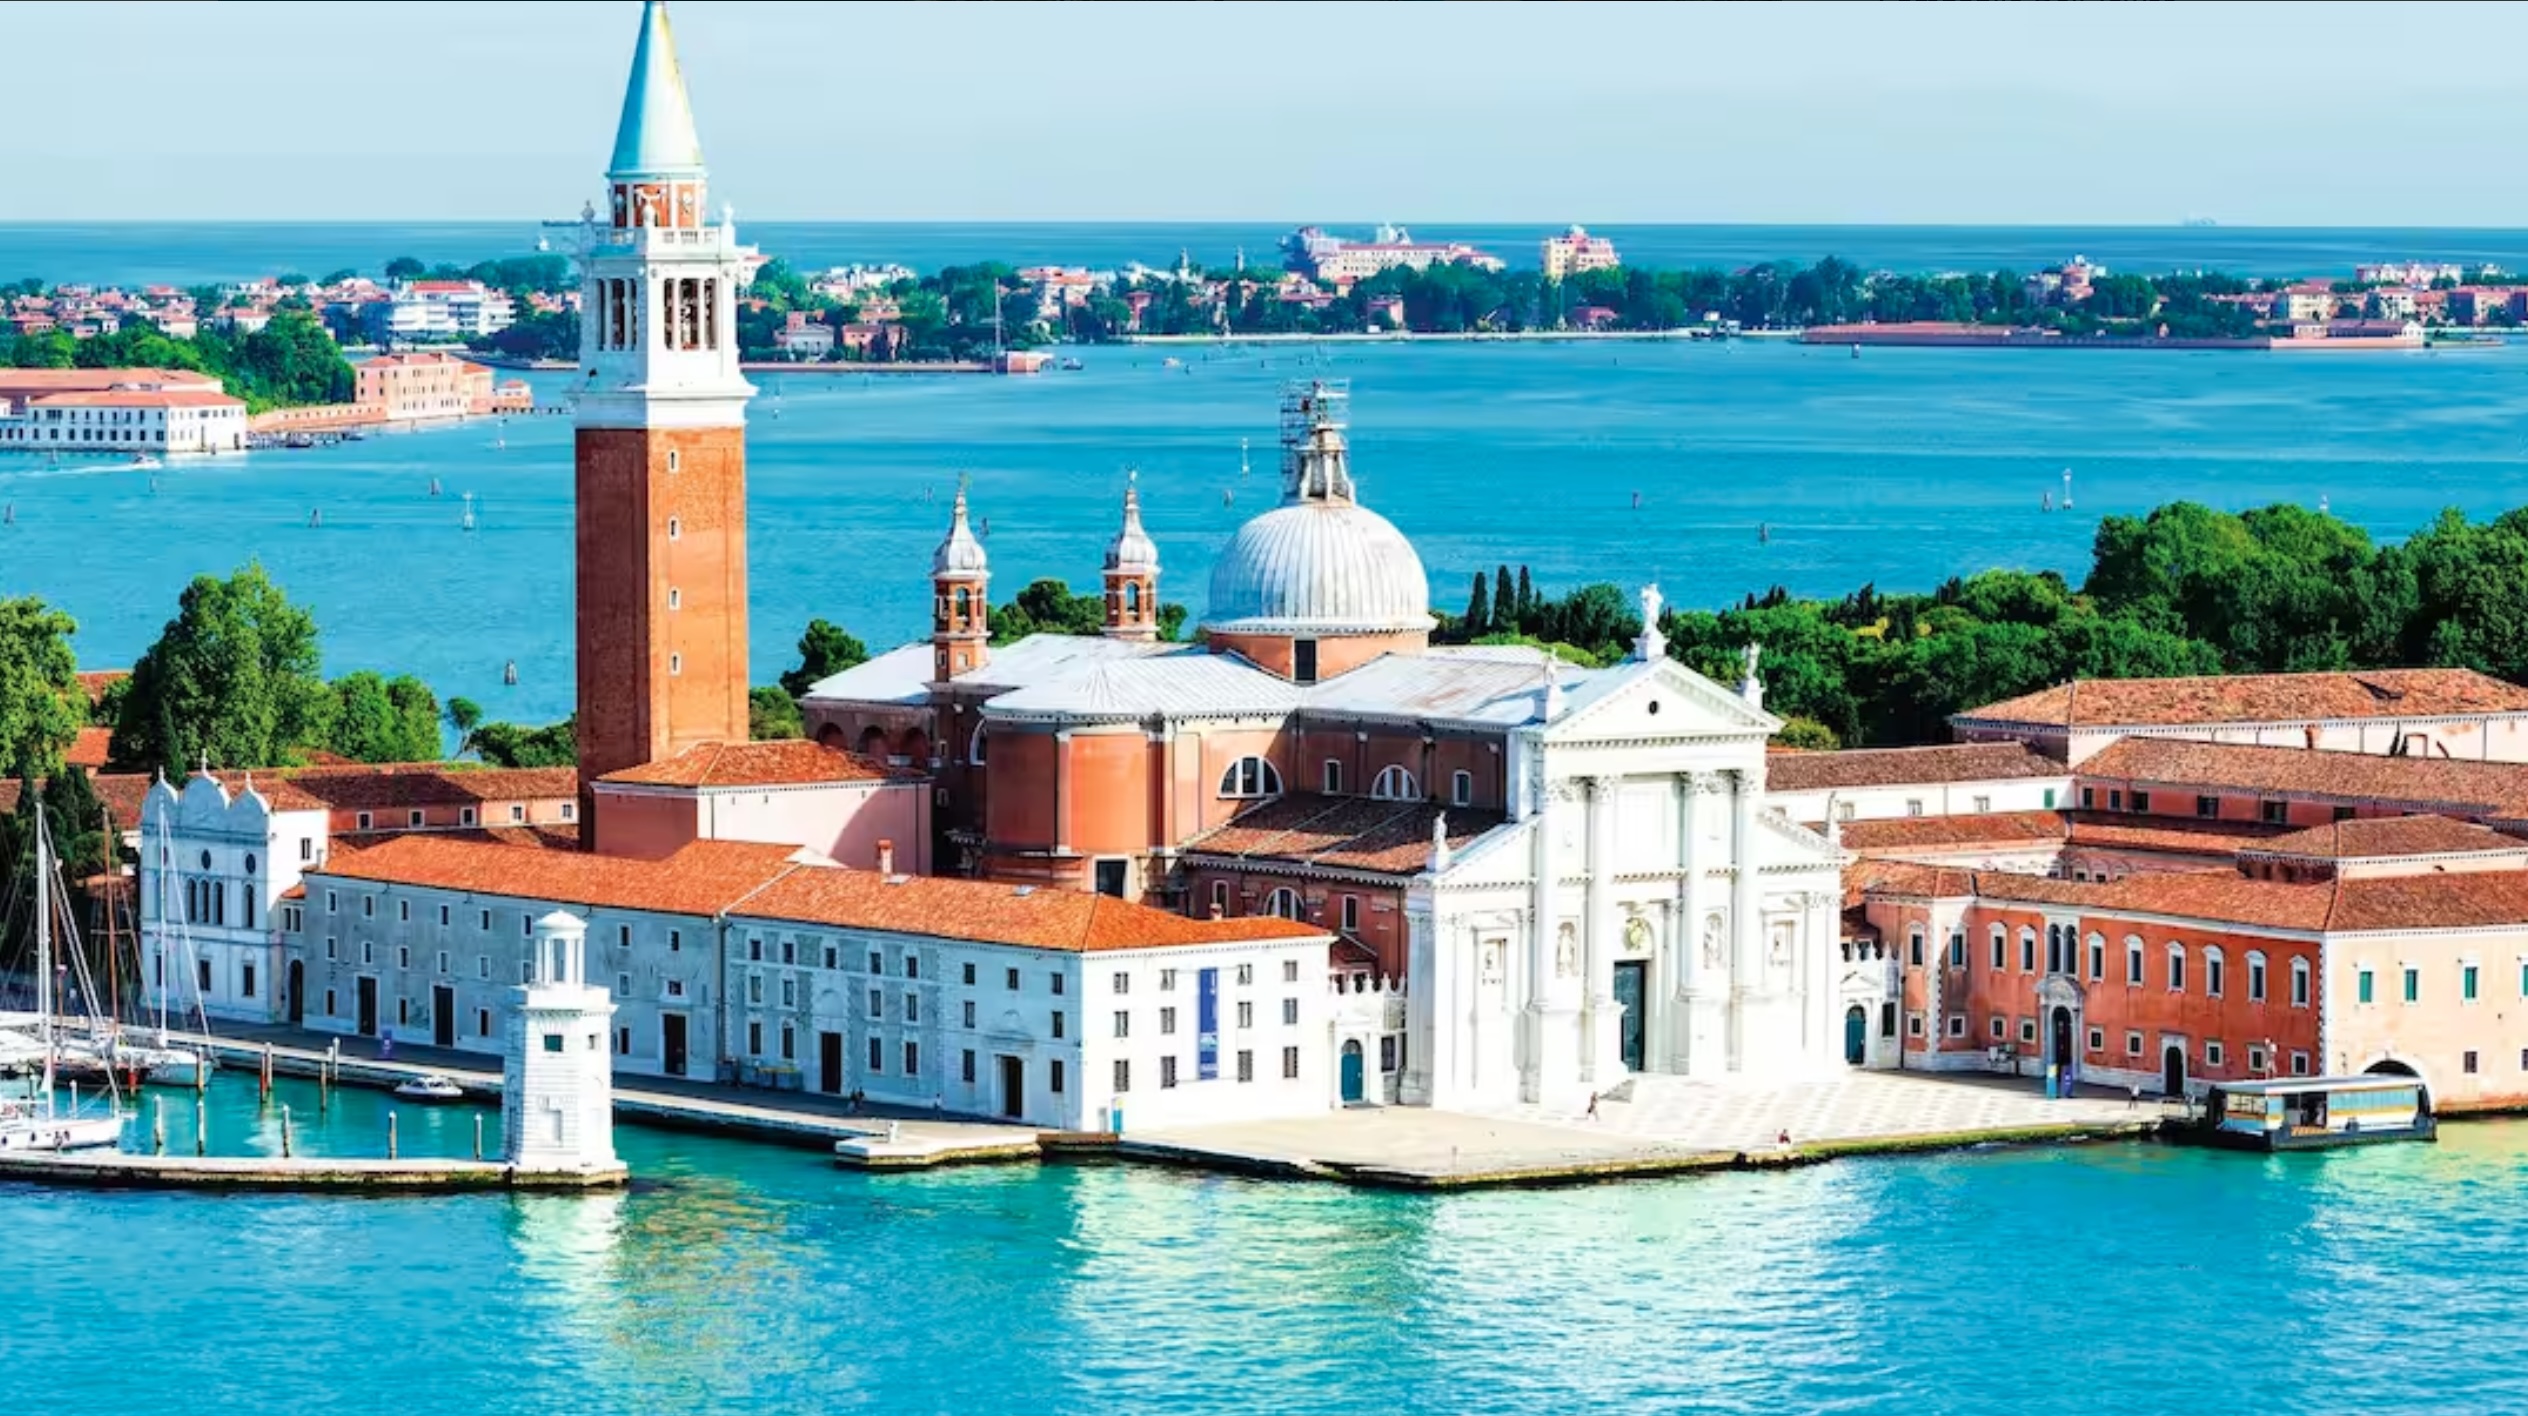 San Giorgio Island, Venice. Italy